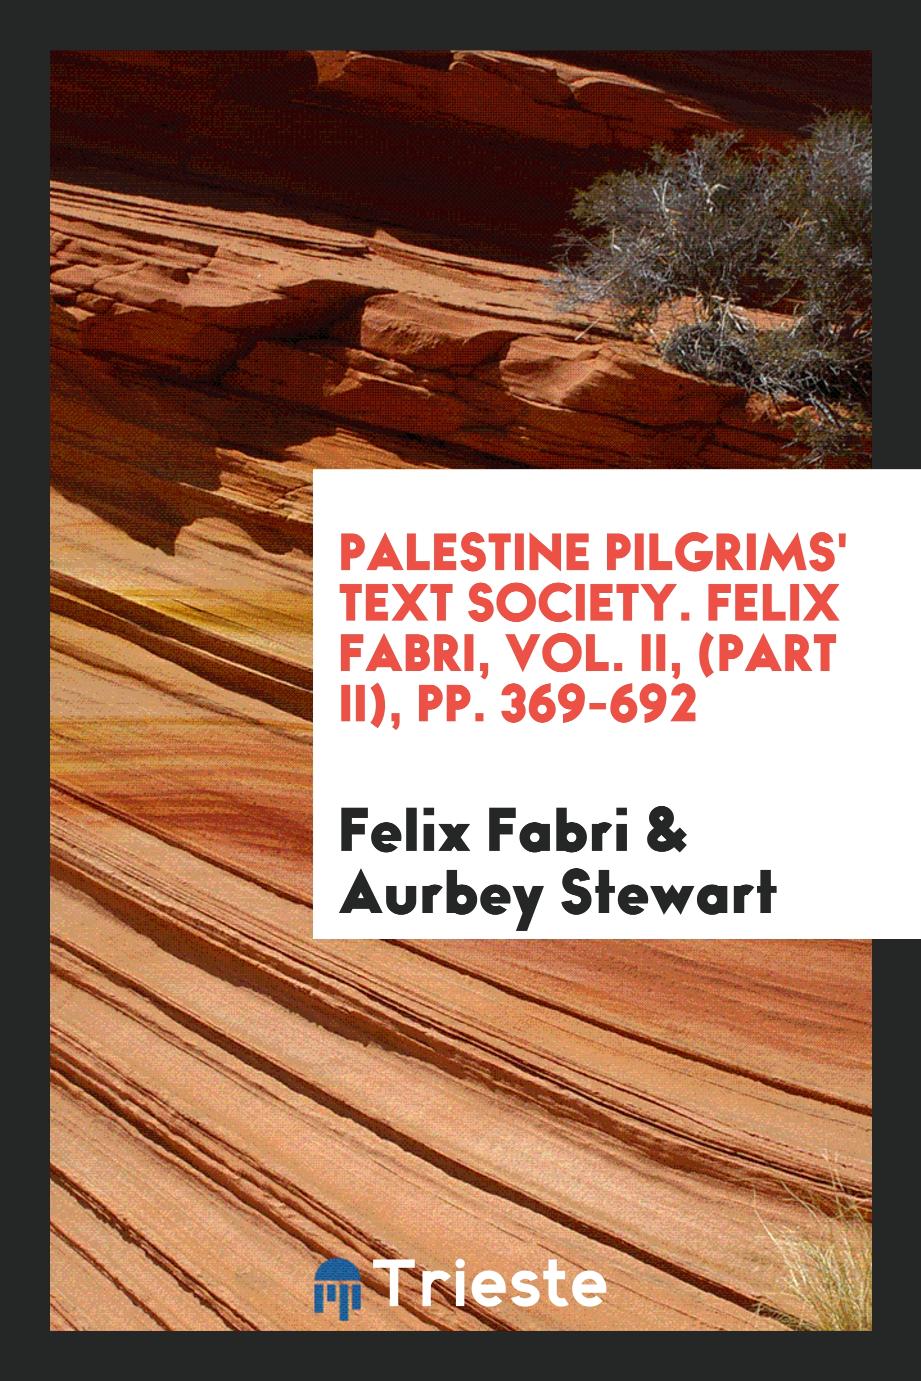 Palestine Pilgrims' Text Society. Felix Fabri, Vol. II, (Part II), pp. 369-692